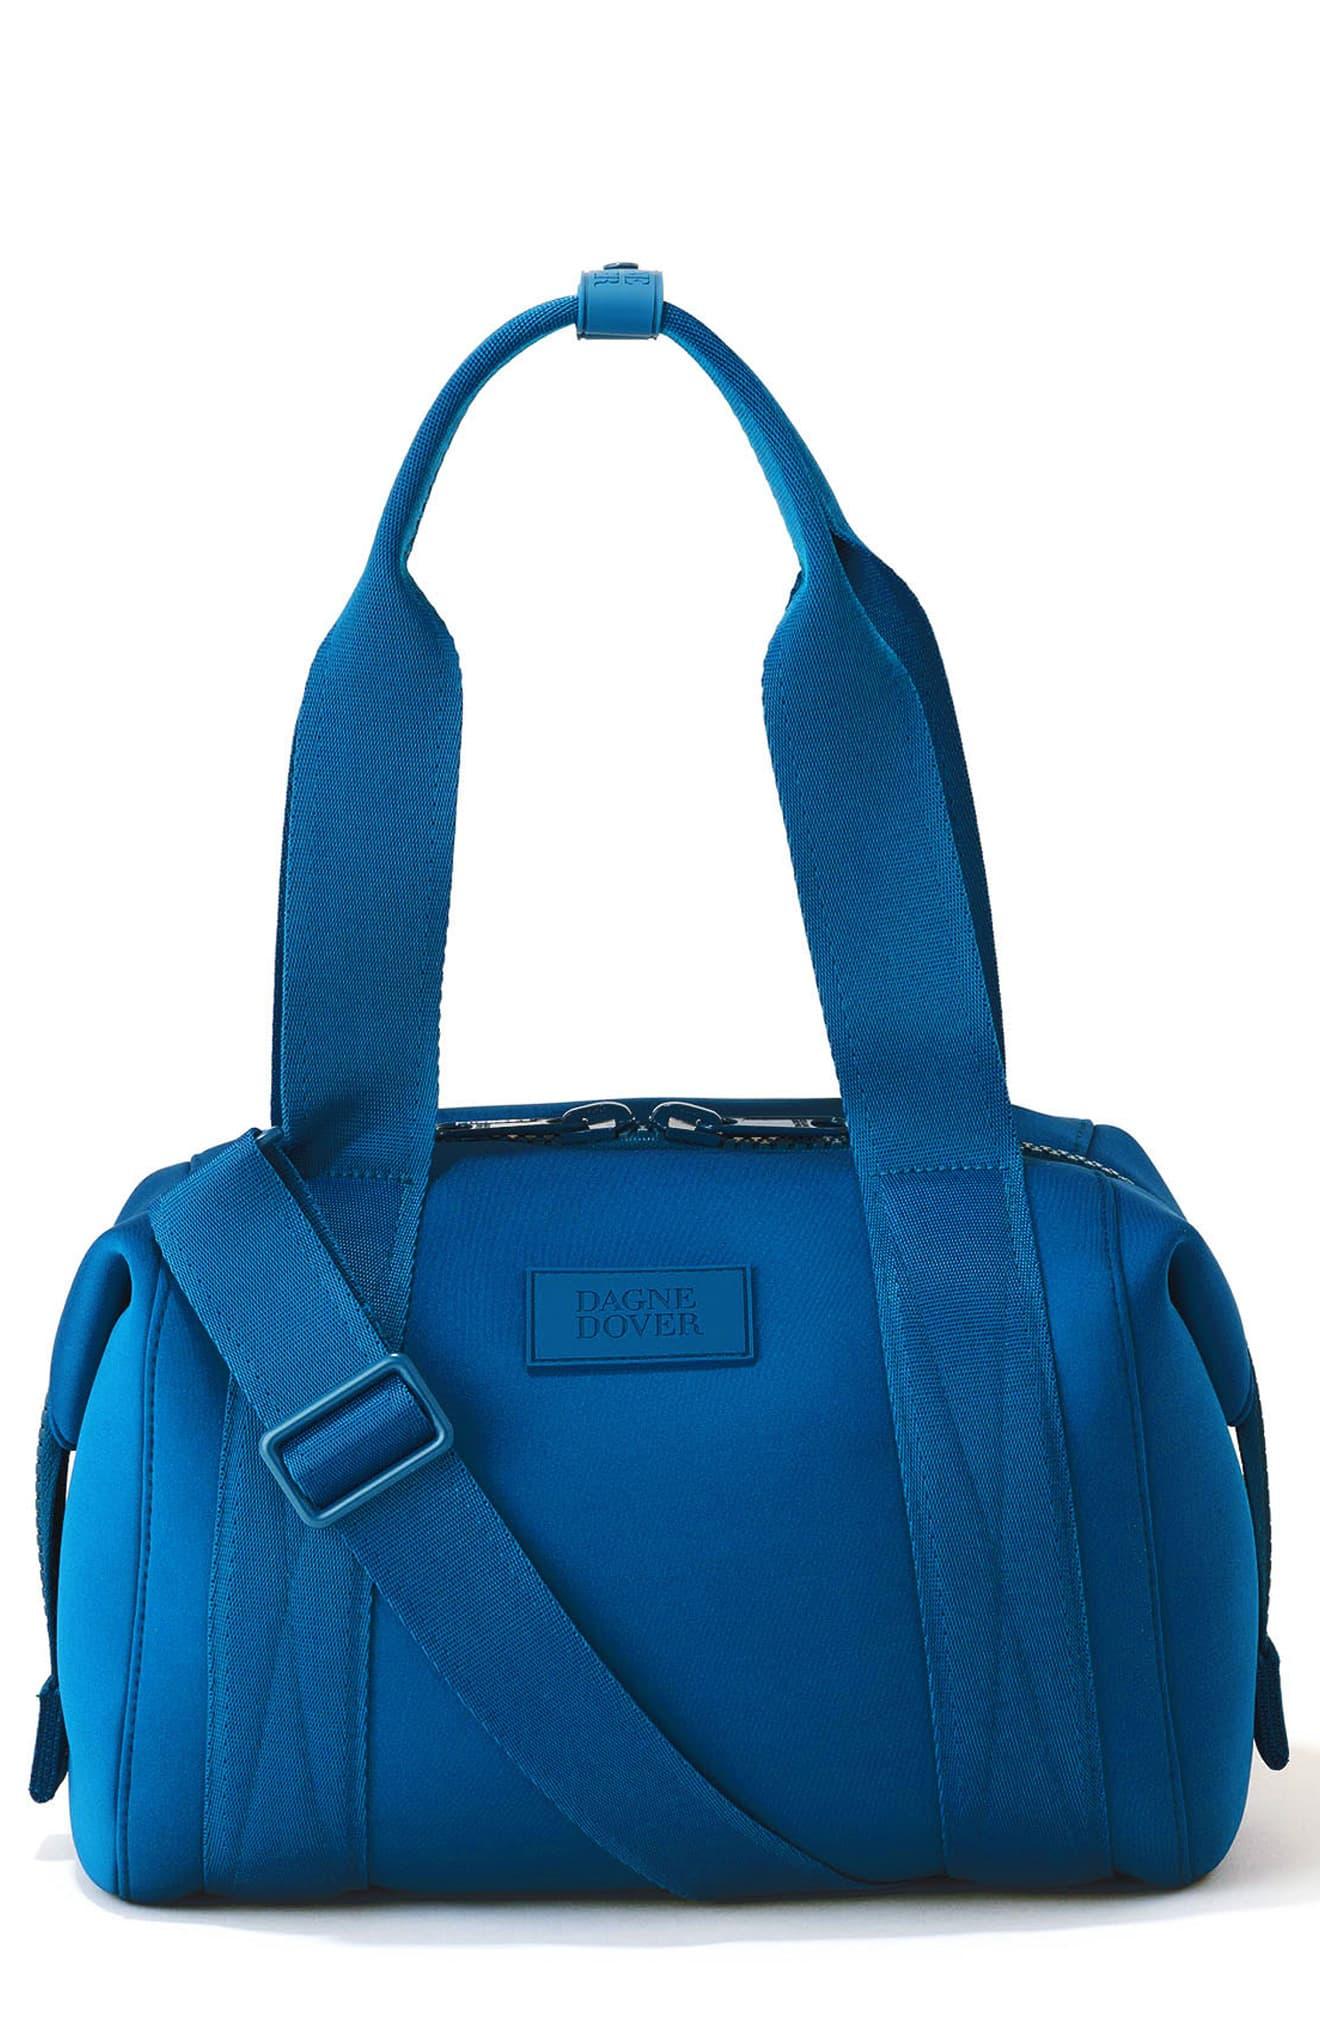 Lyst - Dagne Dover 365 Small Landon Carryall Duffle Bag in Blue